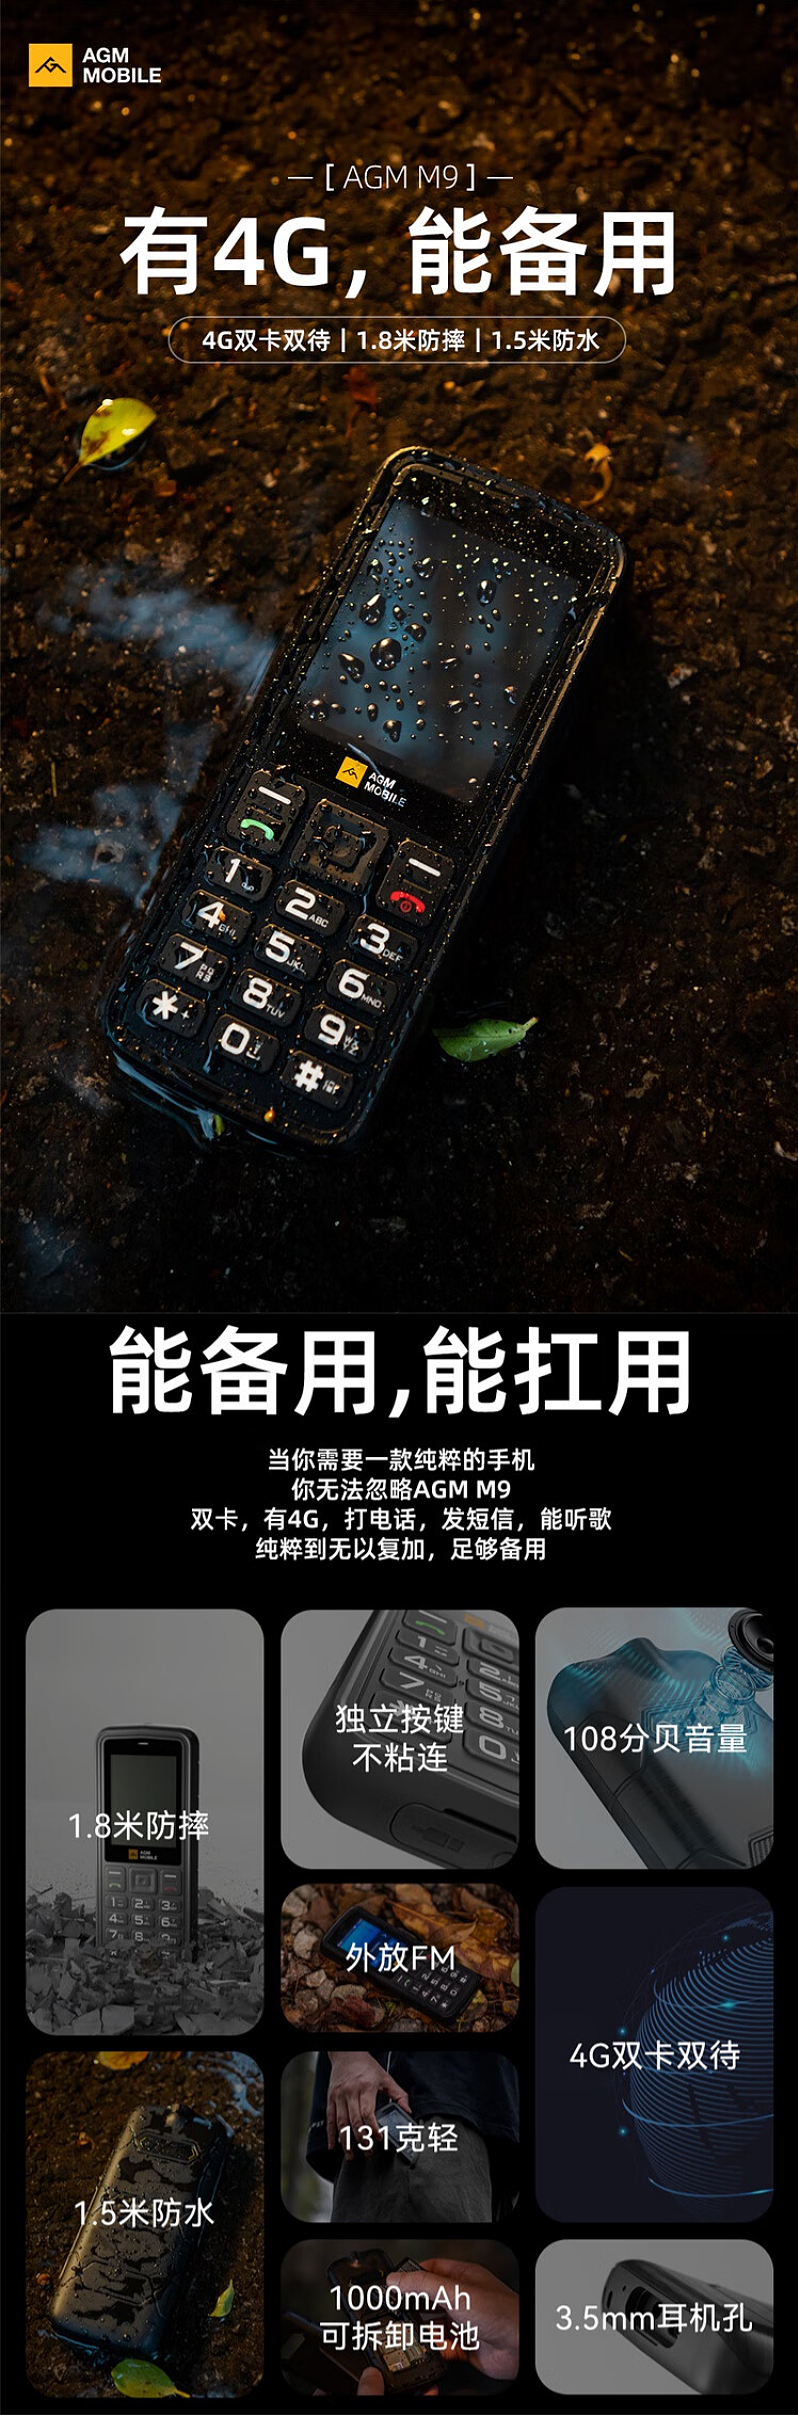 AGM 推出三防功能手机 M9：4G 全网通、1.8 米防摔 / 1.5 米防水，199 元 - 1